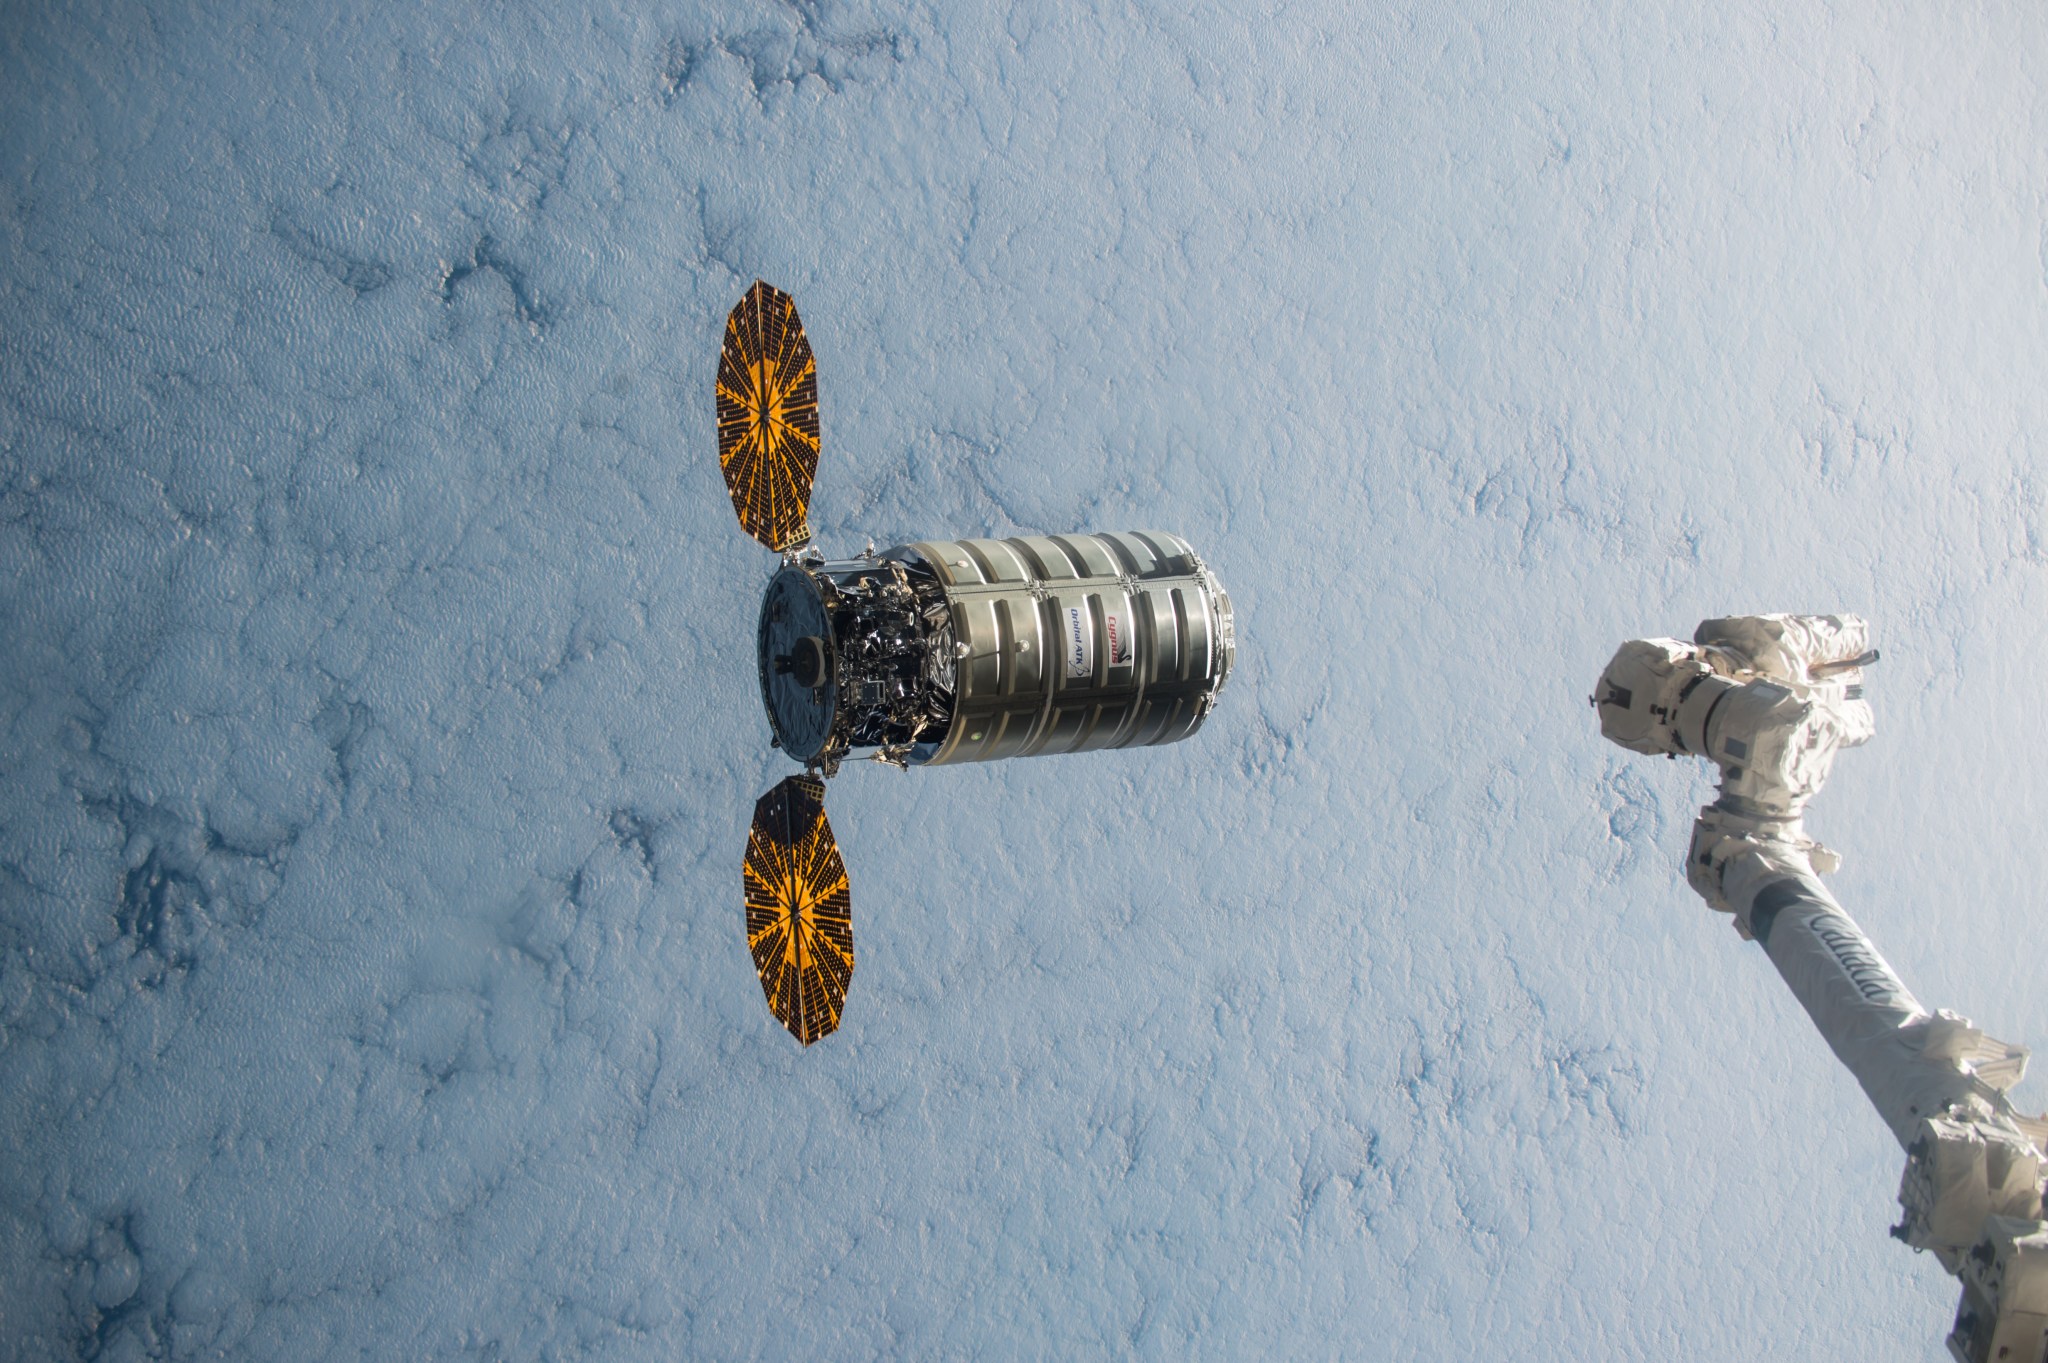 Orbital ATK's Cygnus cargo spacecraft